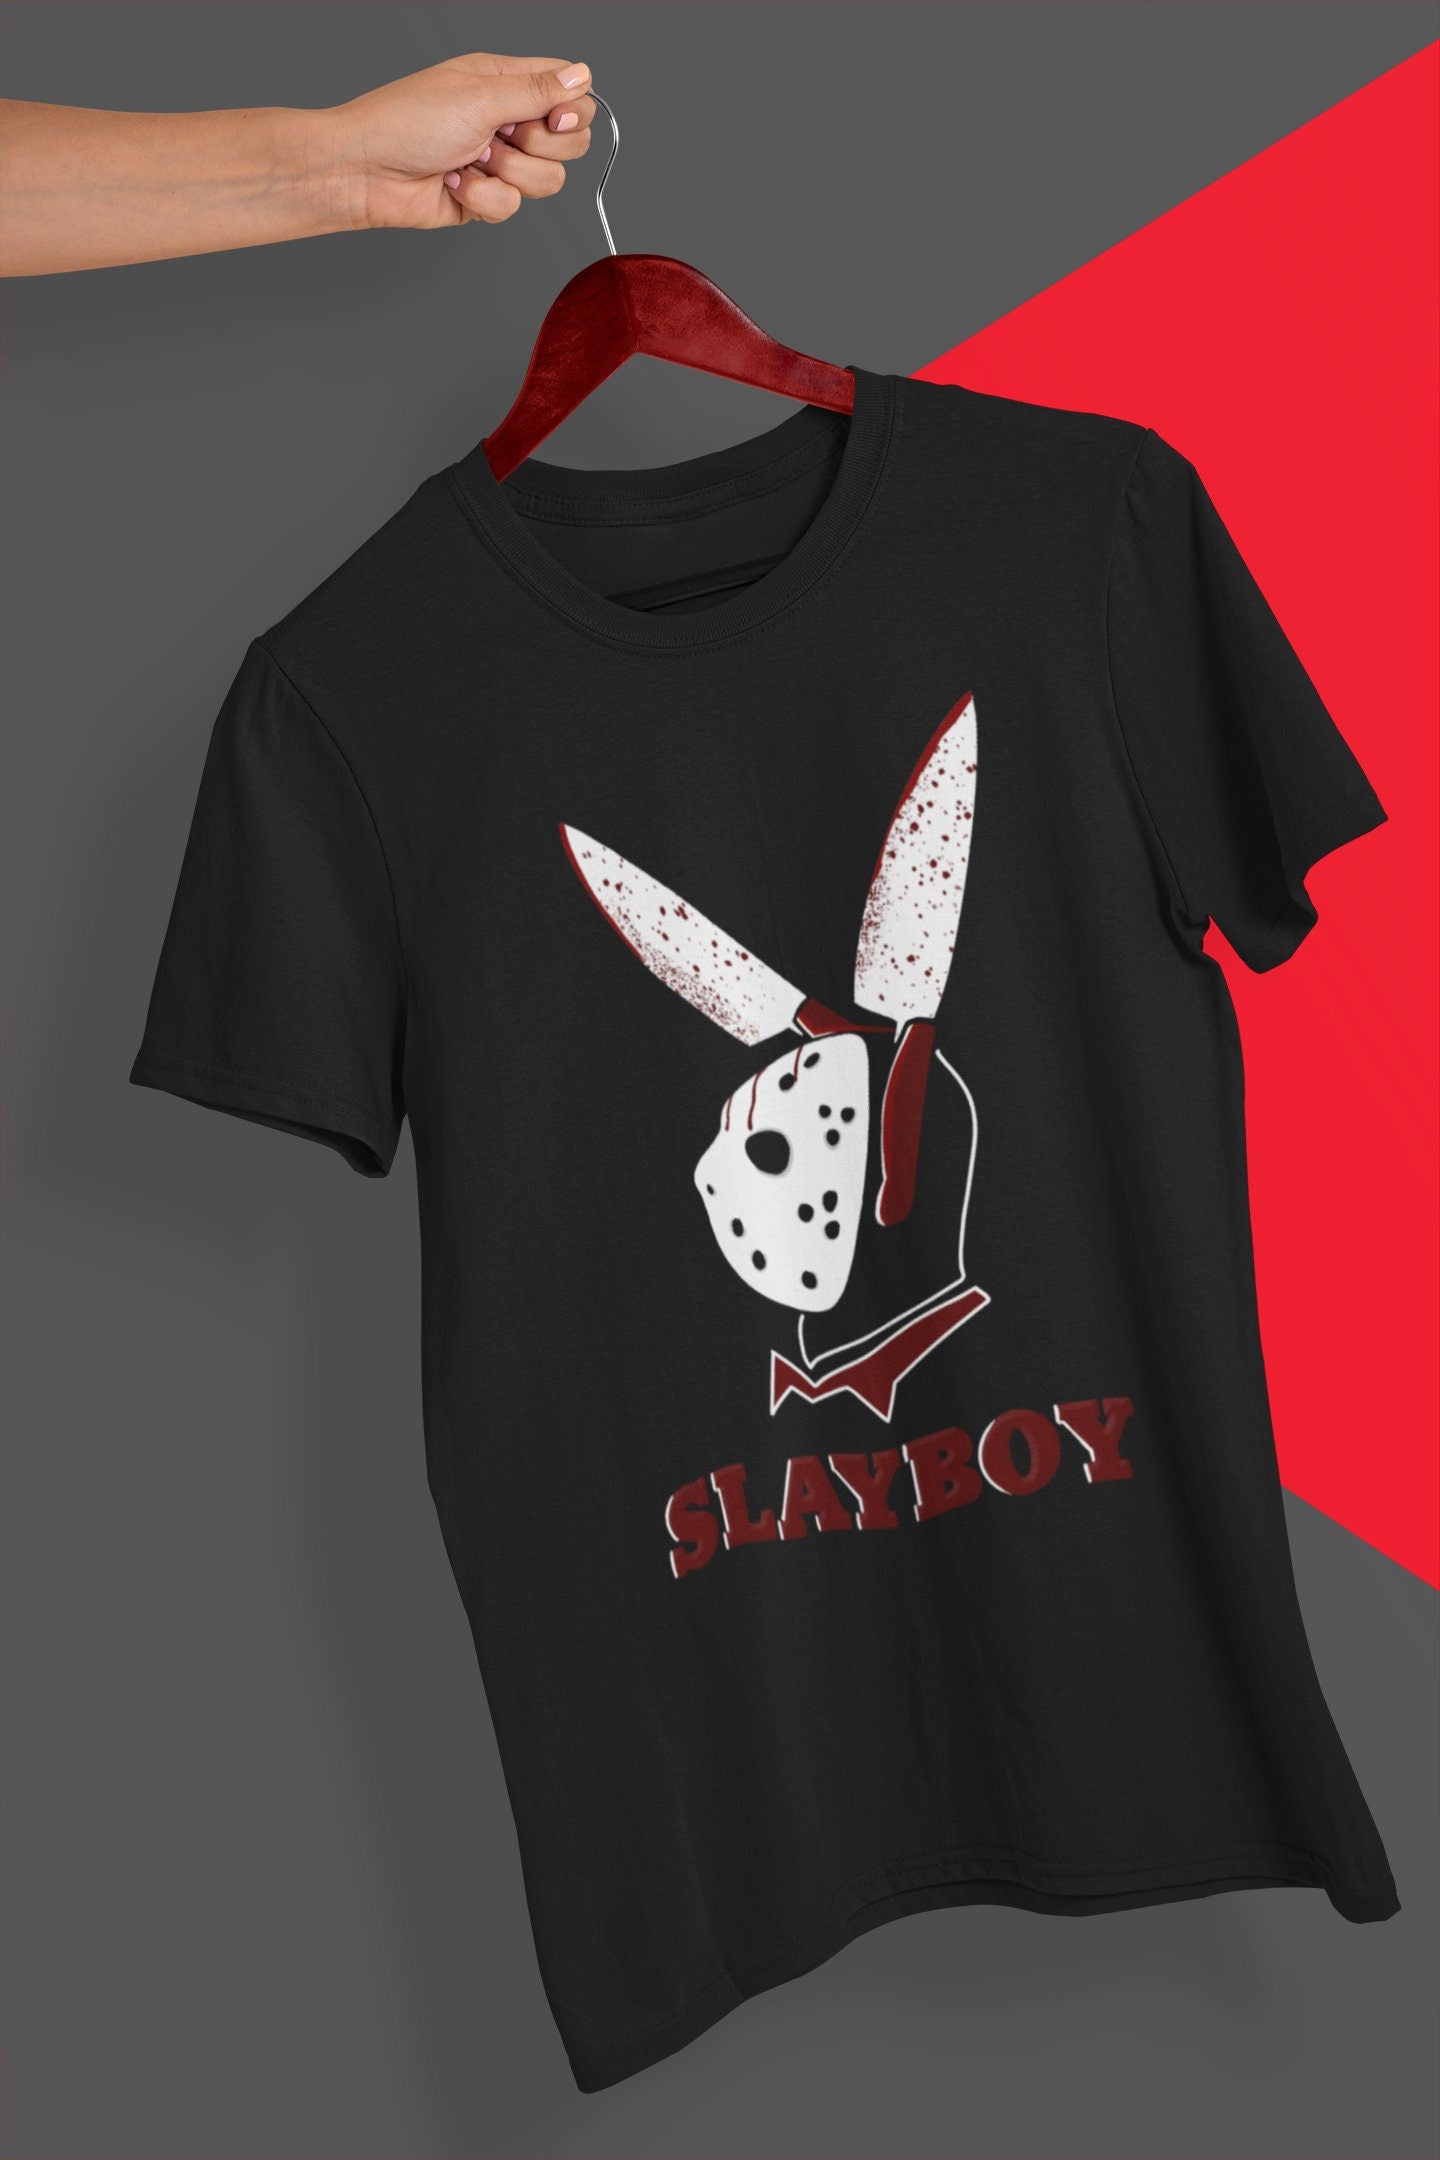 SLAYBOY Jason Vorhees Funny DTG Printed T Shirt